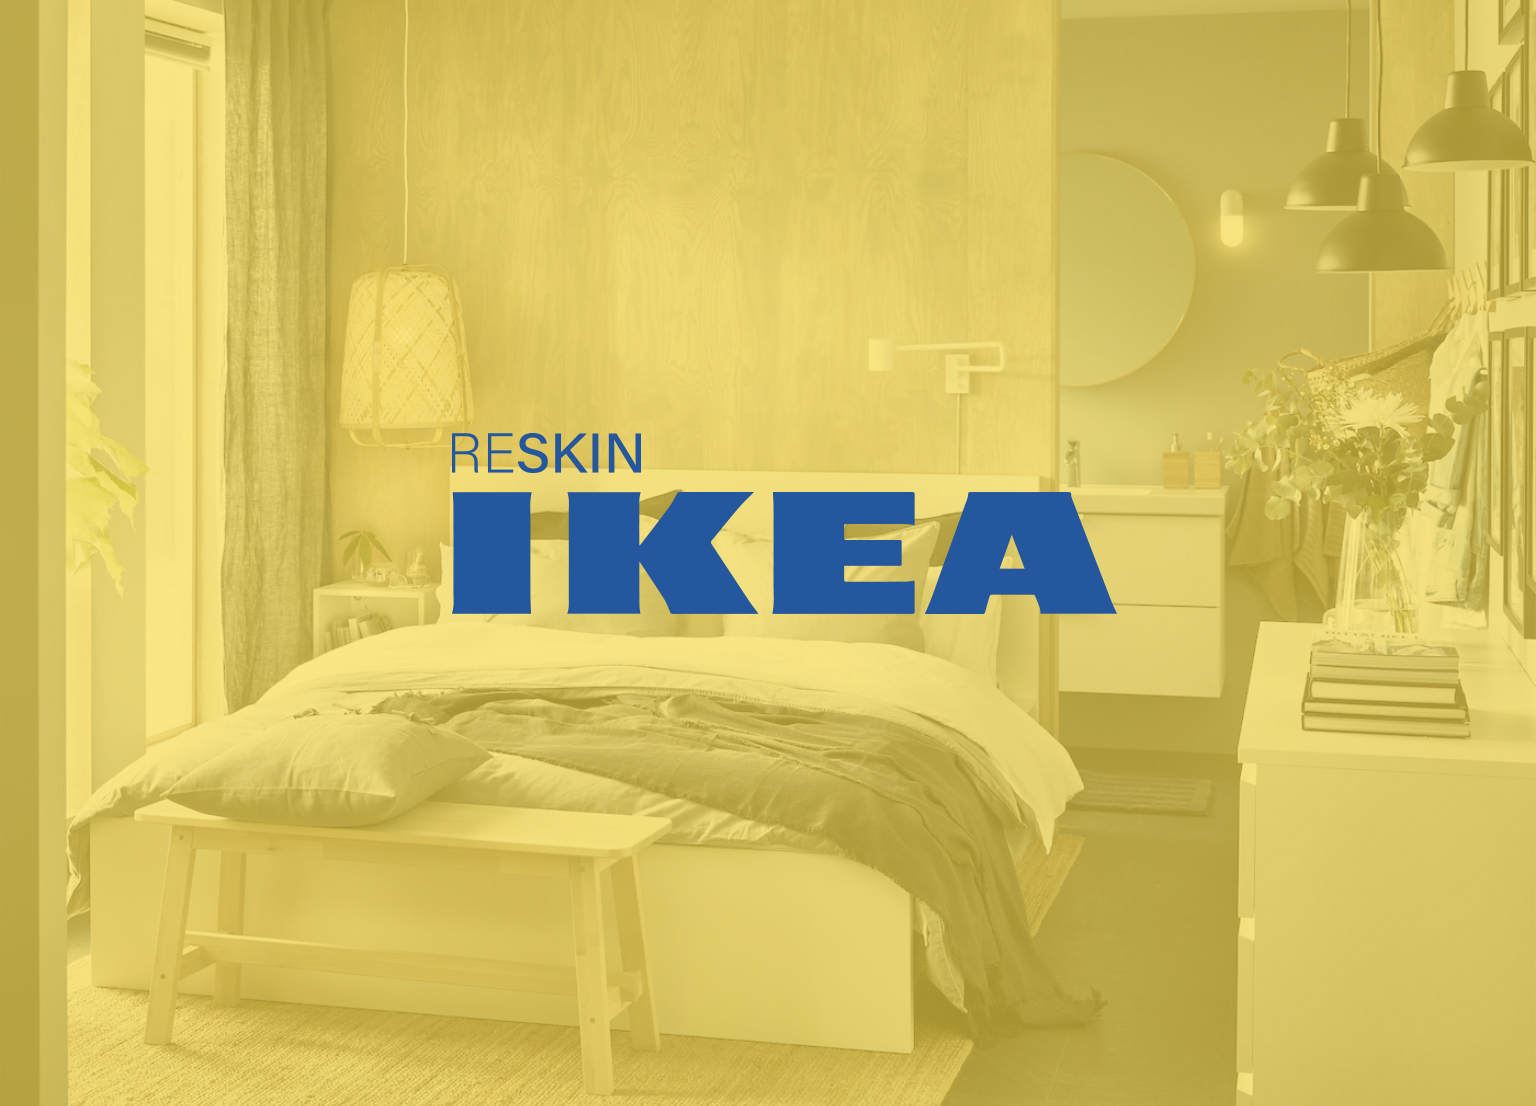 IKEA RESPONSIVE DESIGN - Han